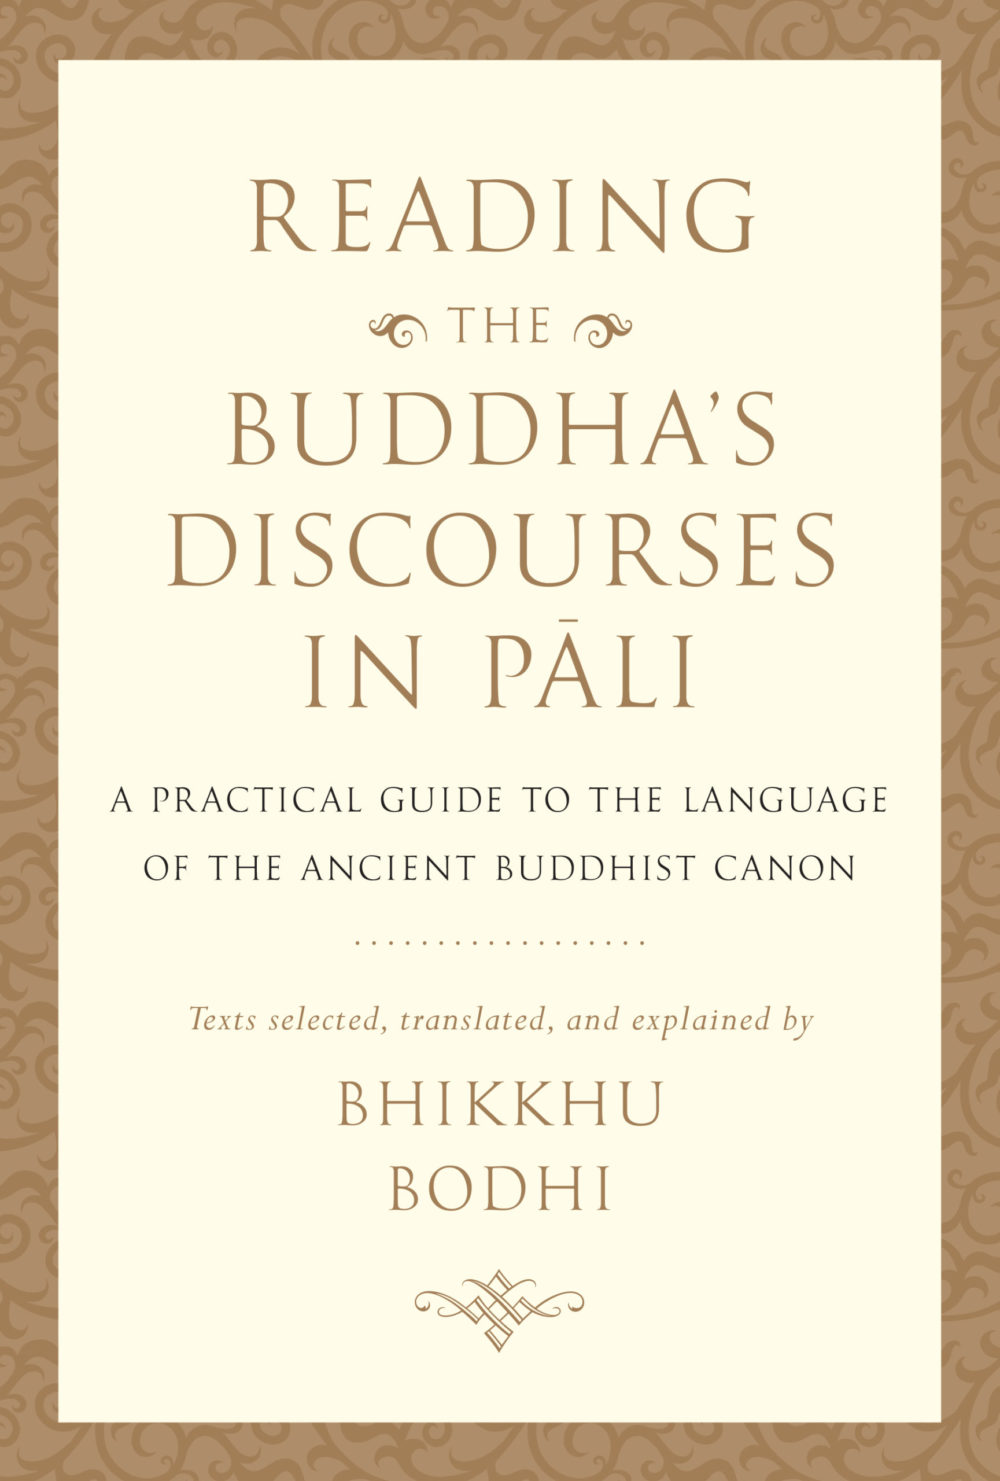 wisdom-publications-tibetan-buddhism-reading-the-buddhas-discourses-in-pali-bhikkhu-bodhi-article